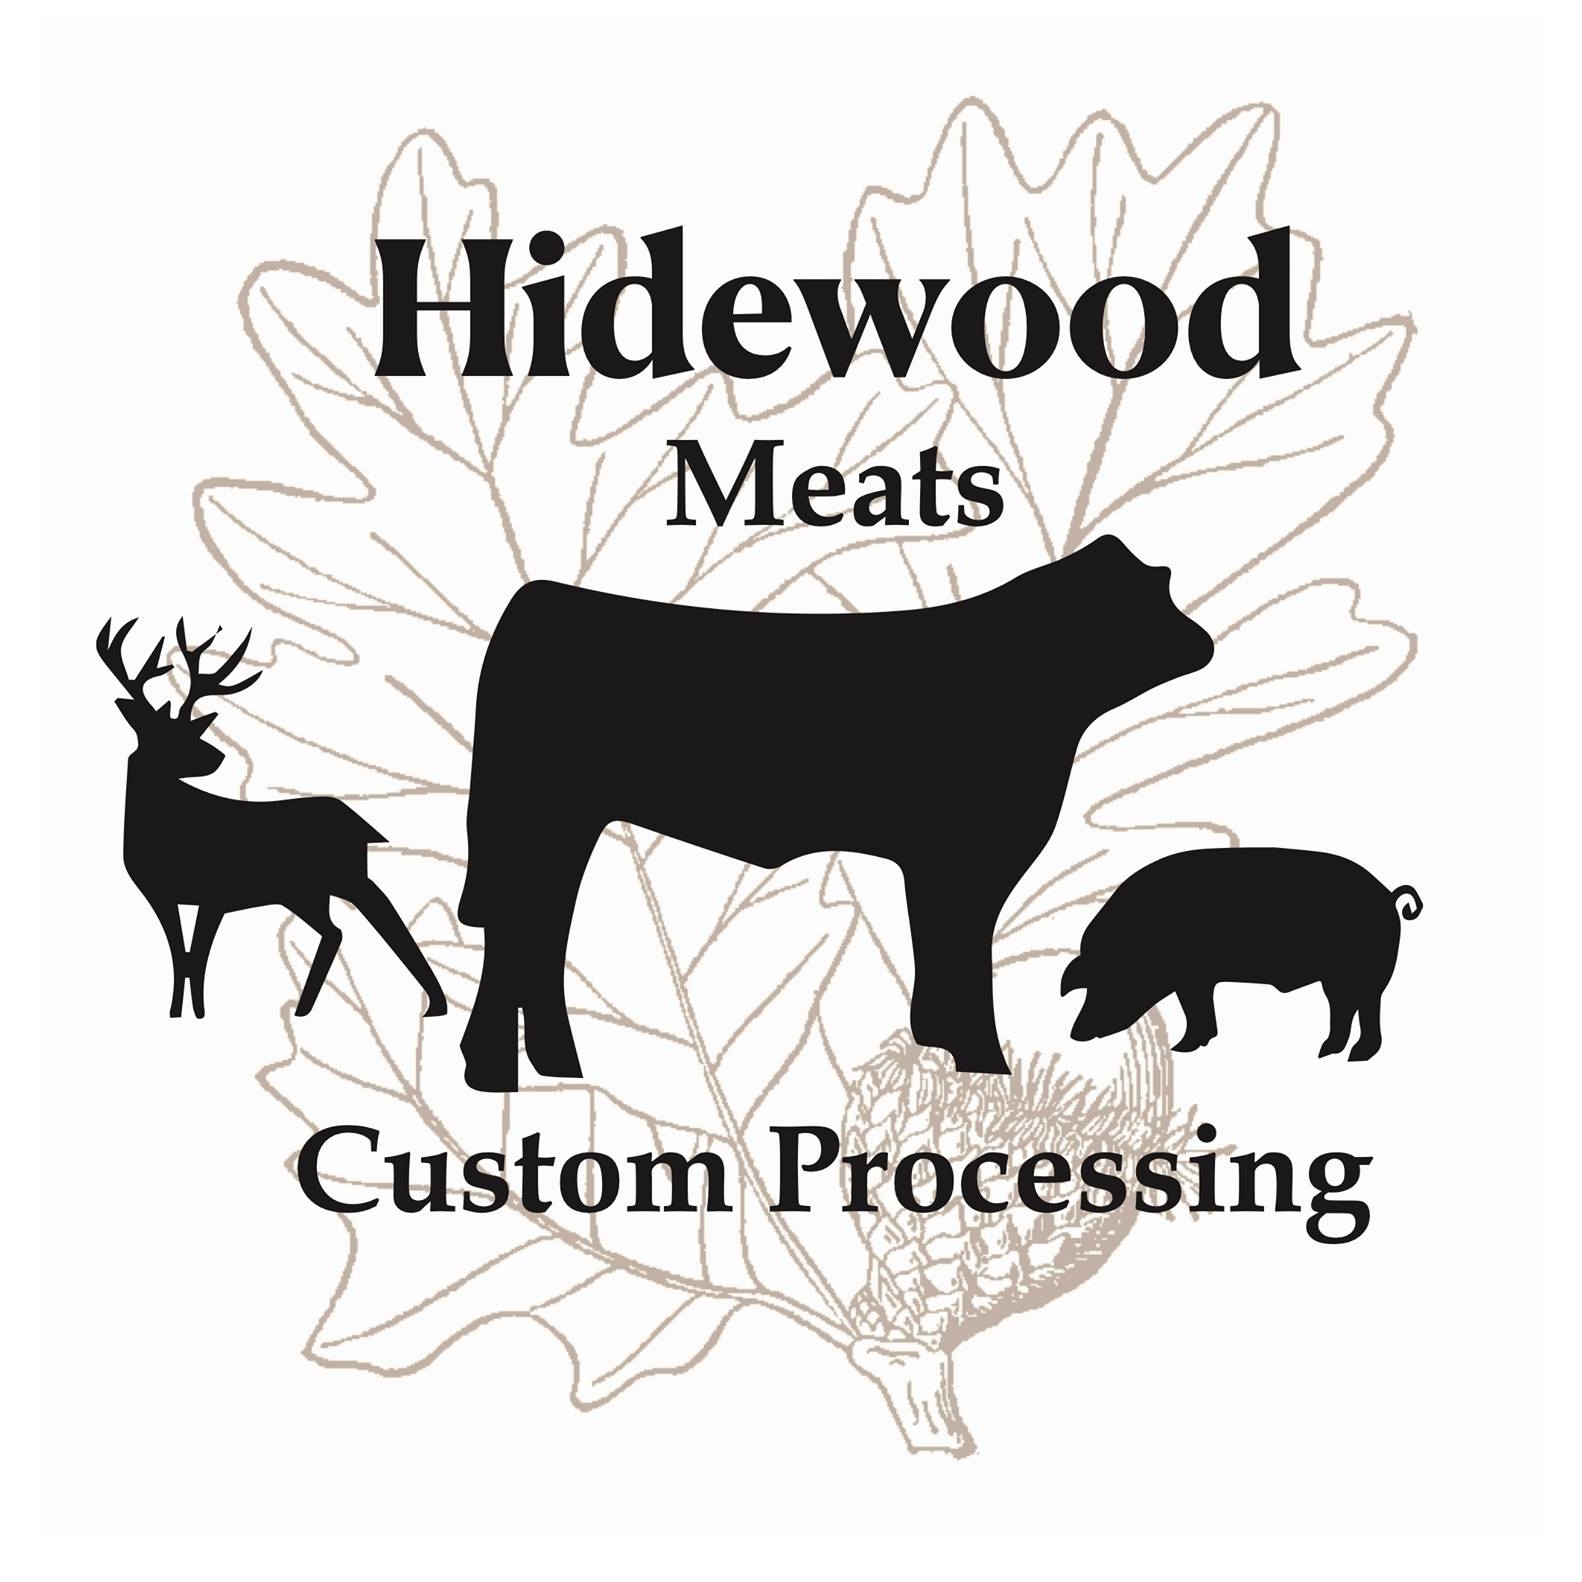 Hidewood Meats's Image